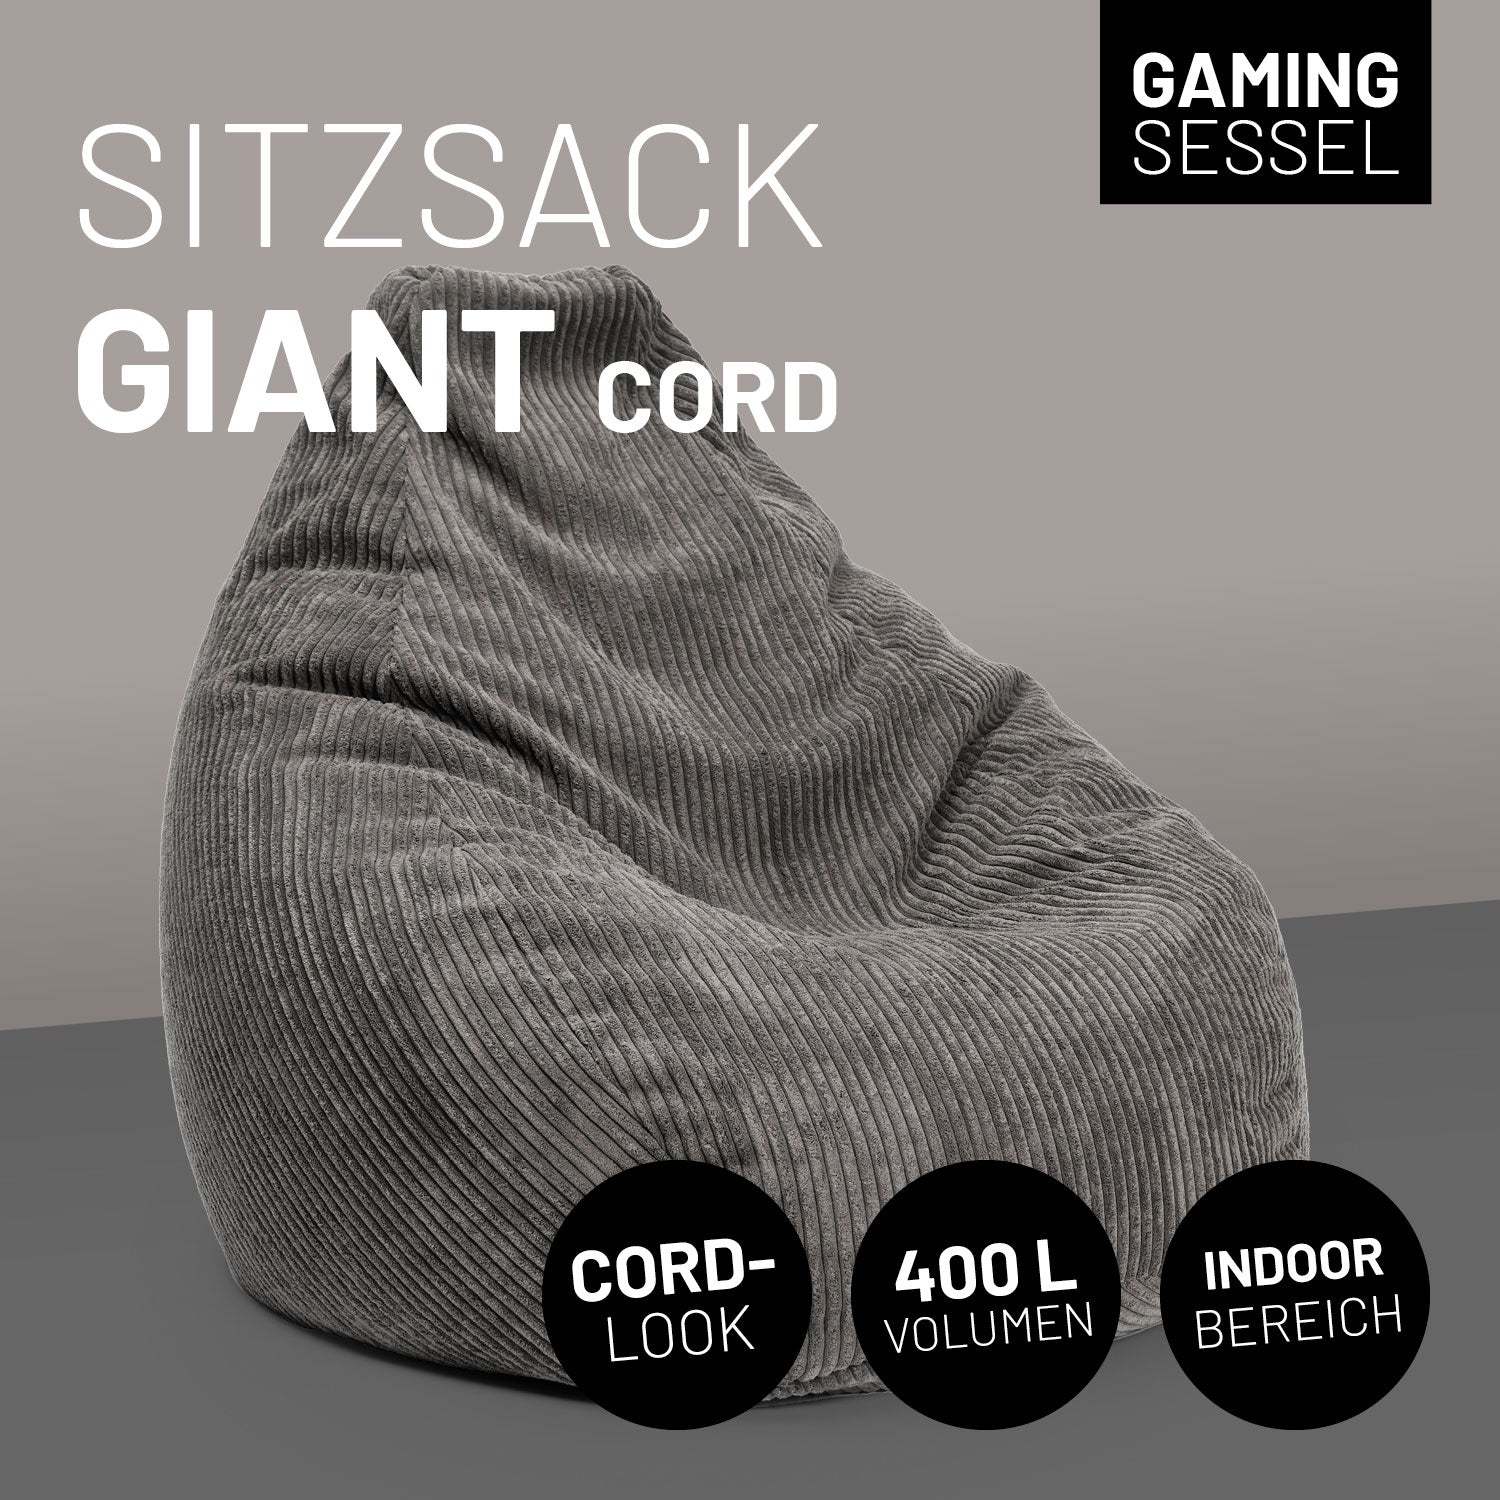 GIANT Cord Sitzsack mit stabiler Lehne  (360 L) - indoor - Grau